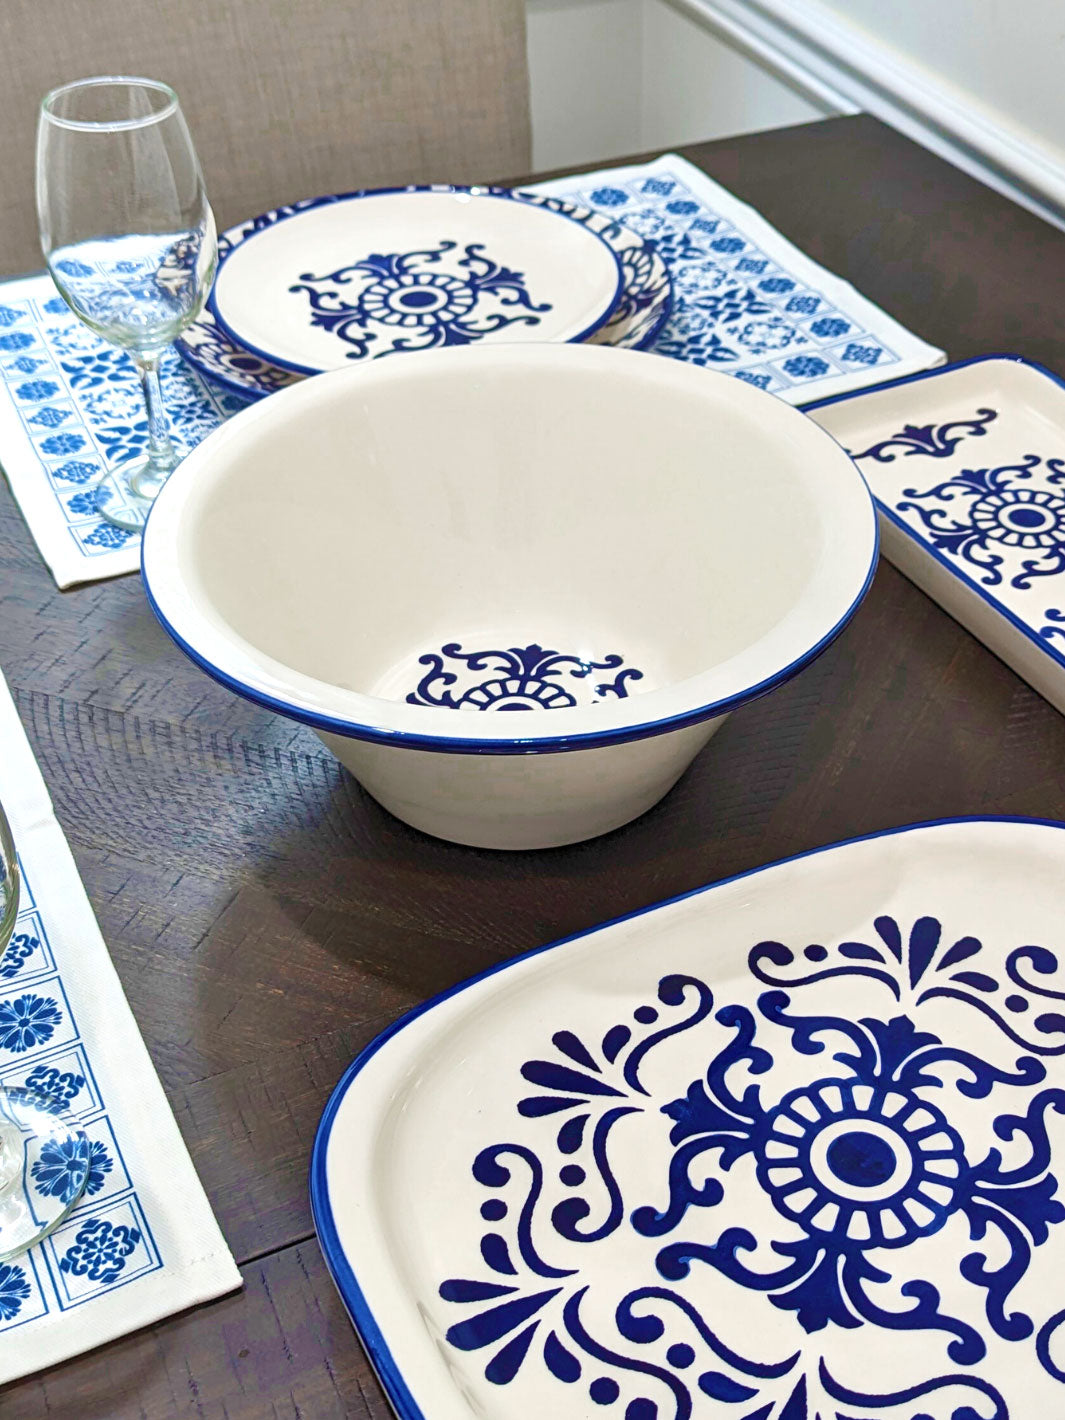 Portuguese Pottery Ceramic Large Salad Serving Bowl - Tradition